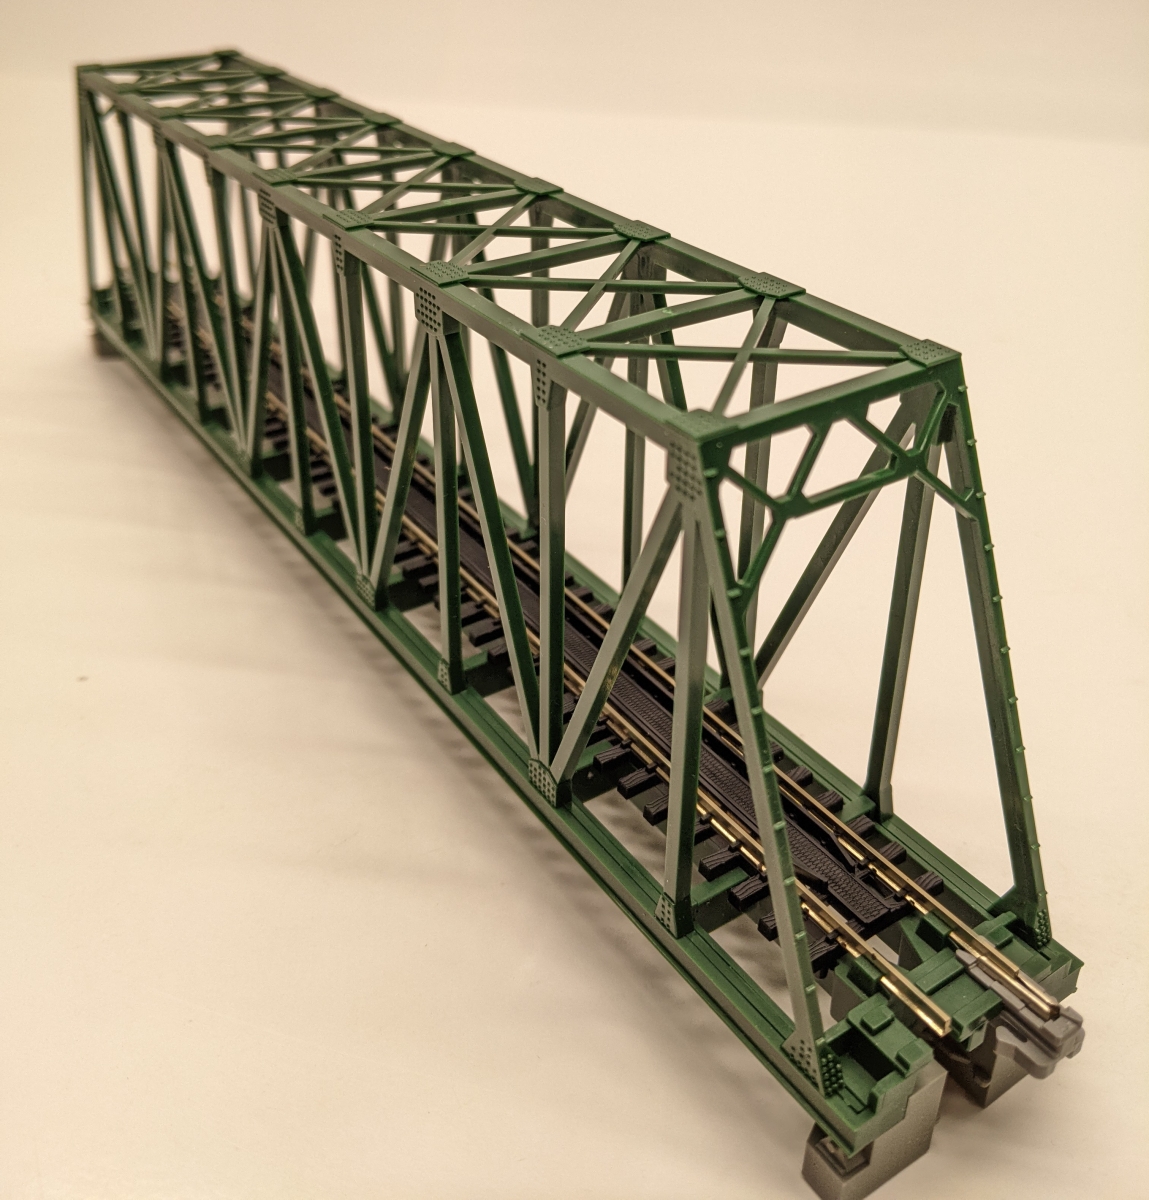 KATO 20-431 248mm 9 3/4 Single Truss Bridge S248t Scale N for sale online 